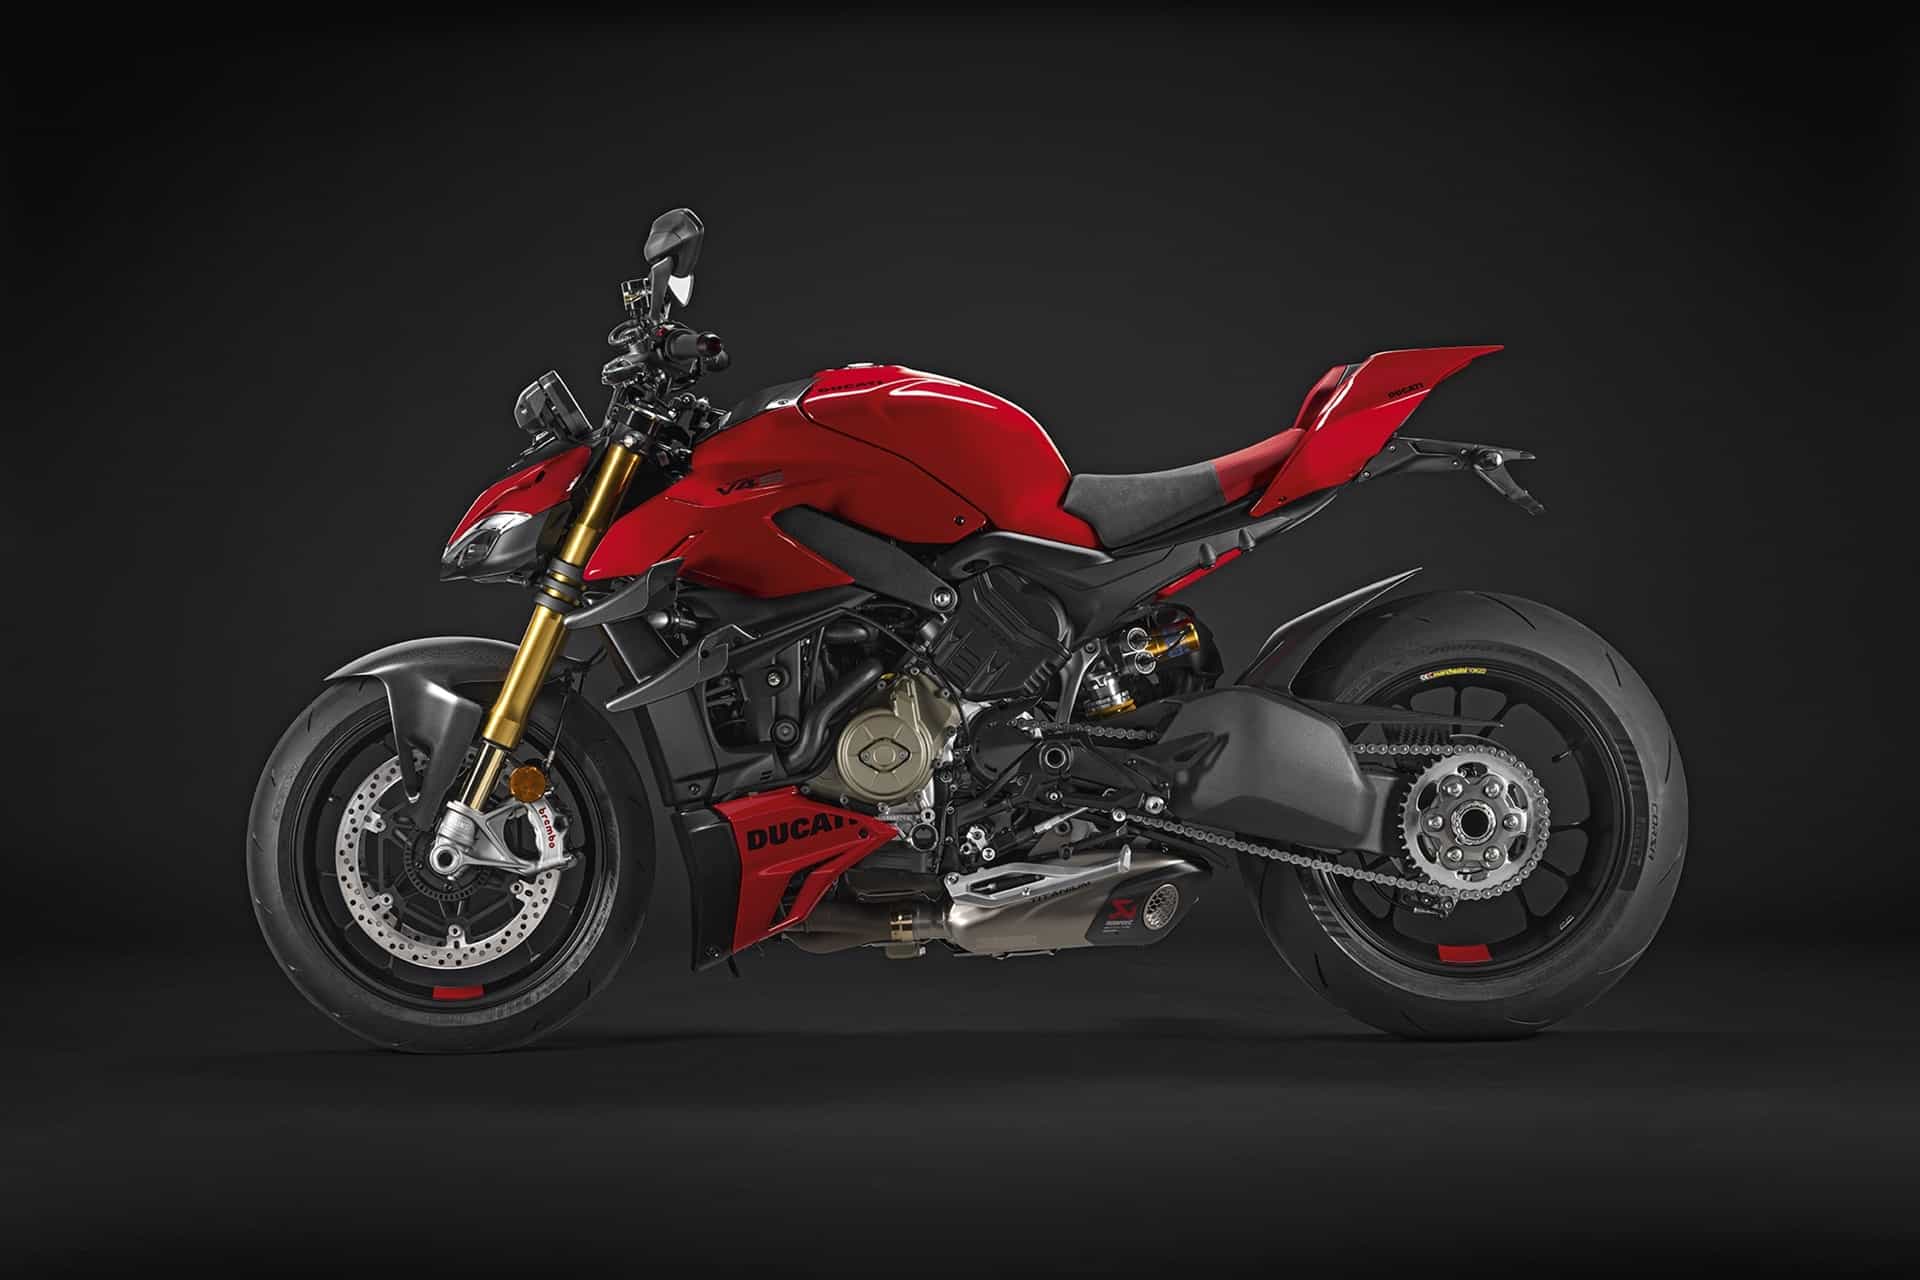 La Streetfighter V4 se viste con los accesorios Ducati Performance